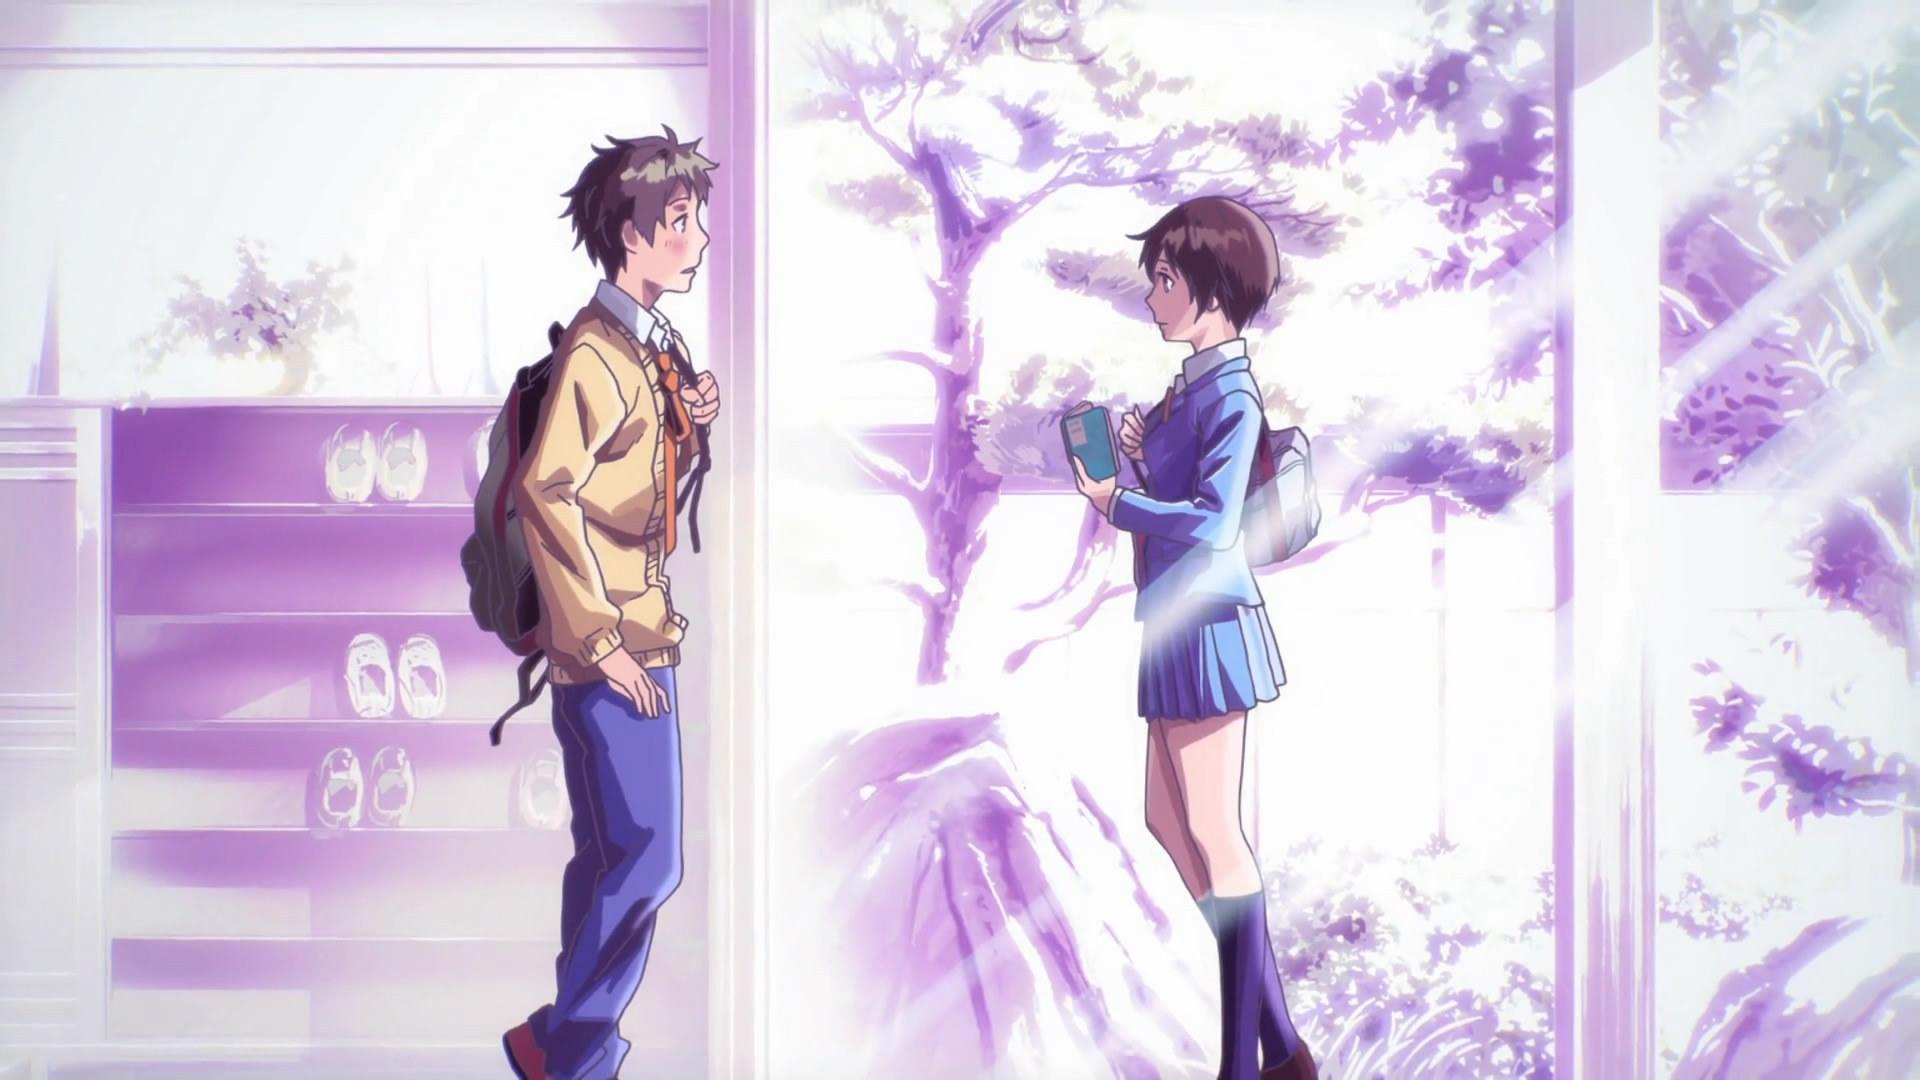 My Favorite Romance anime